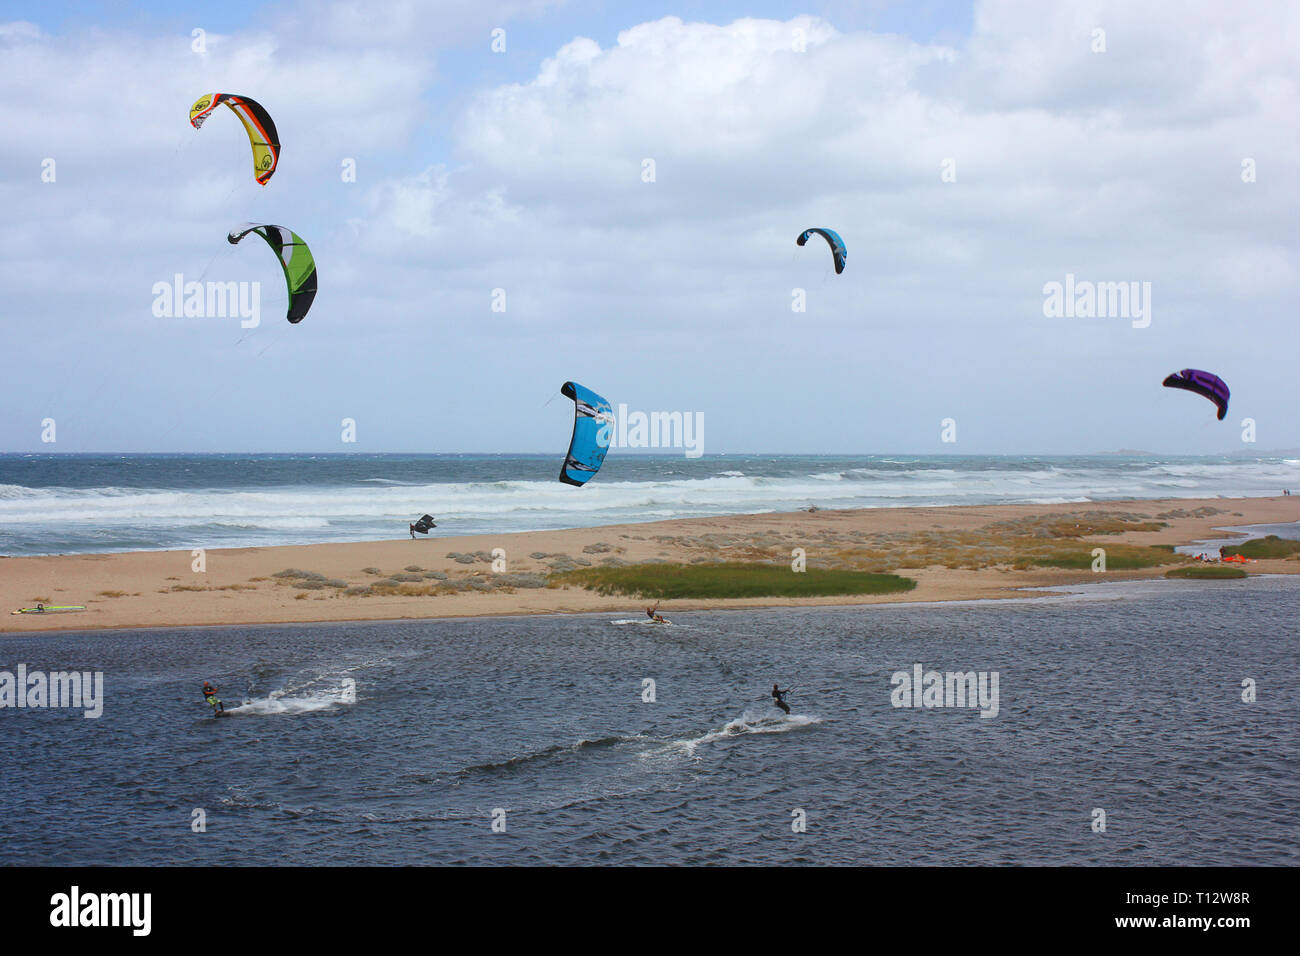 Kitesurfing on a sardinian beach Stock Photo